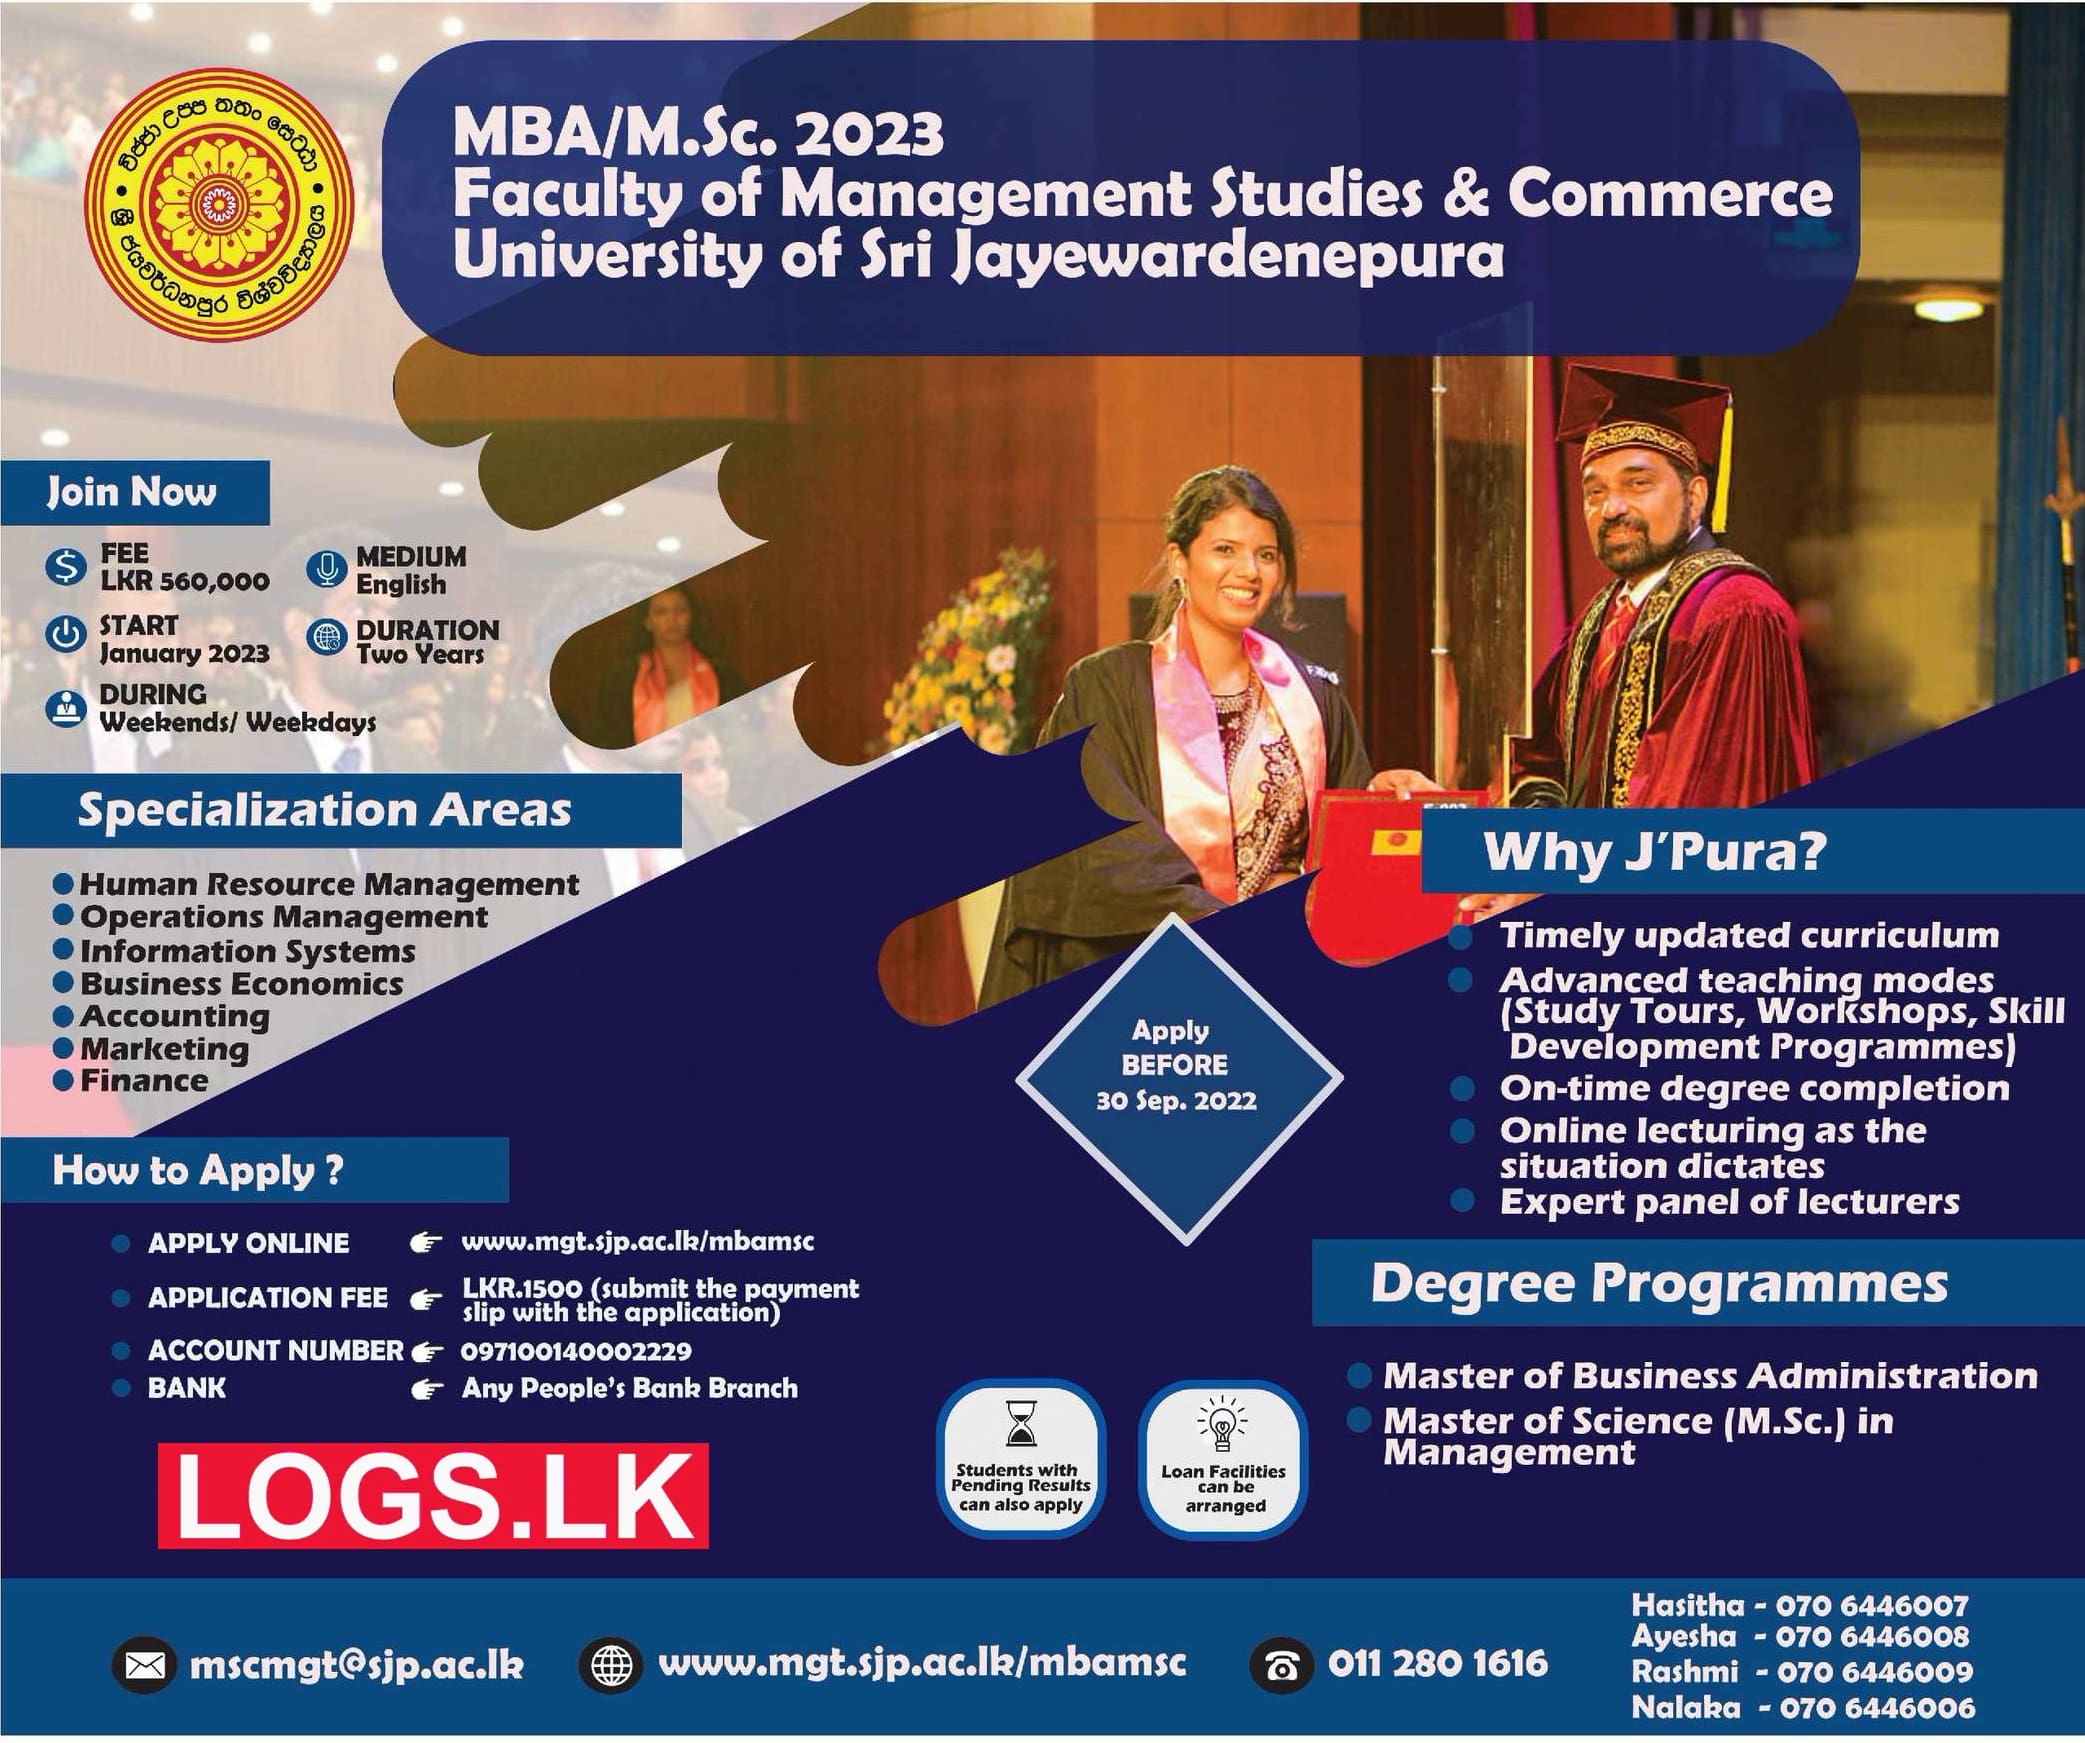 MBA/MSC 2023 Faculty of Management Studies & Commerce - University of Sri Jayewardenepura Courses Details, Apply Online